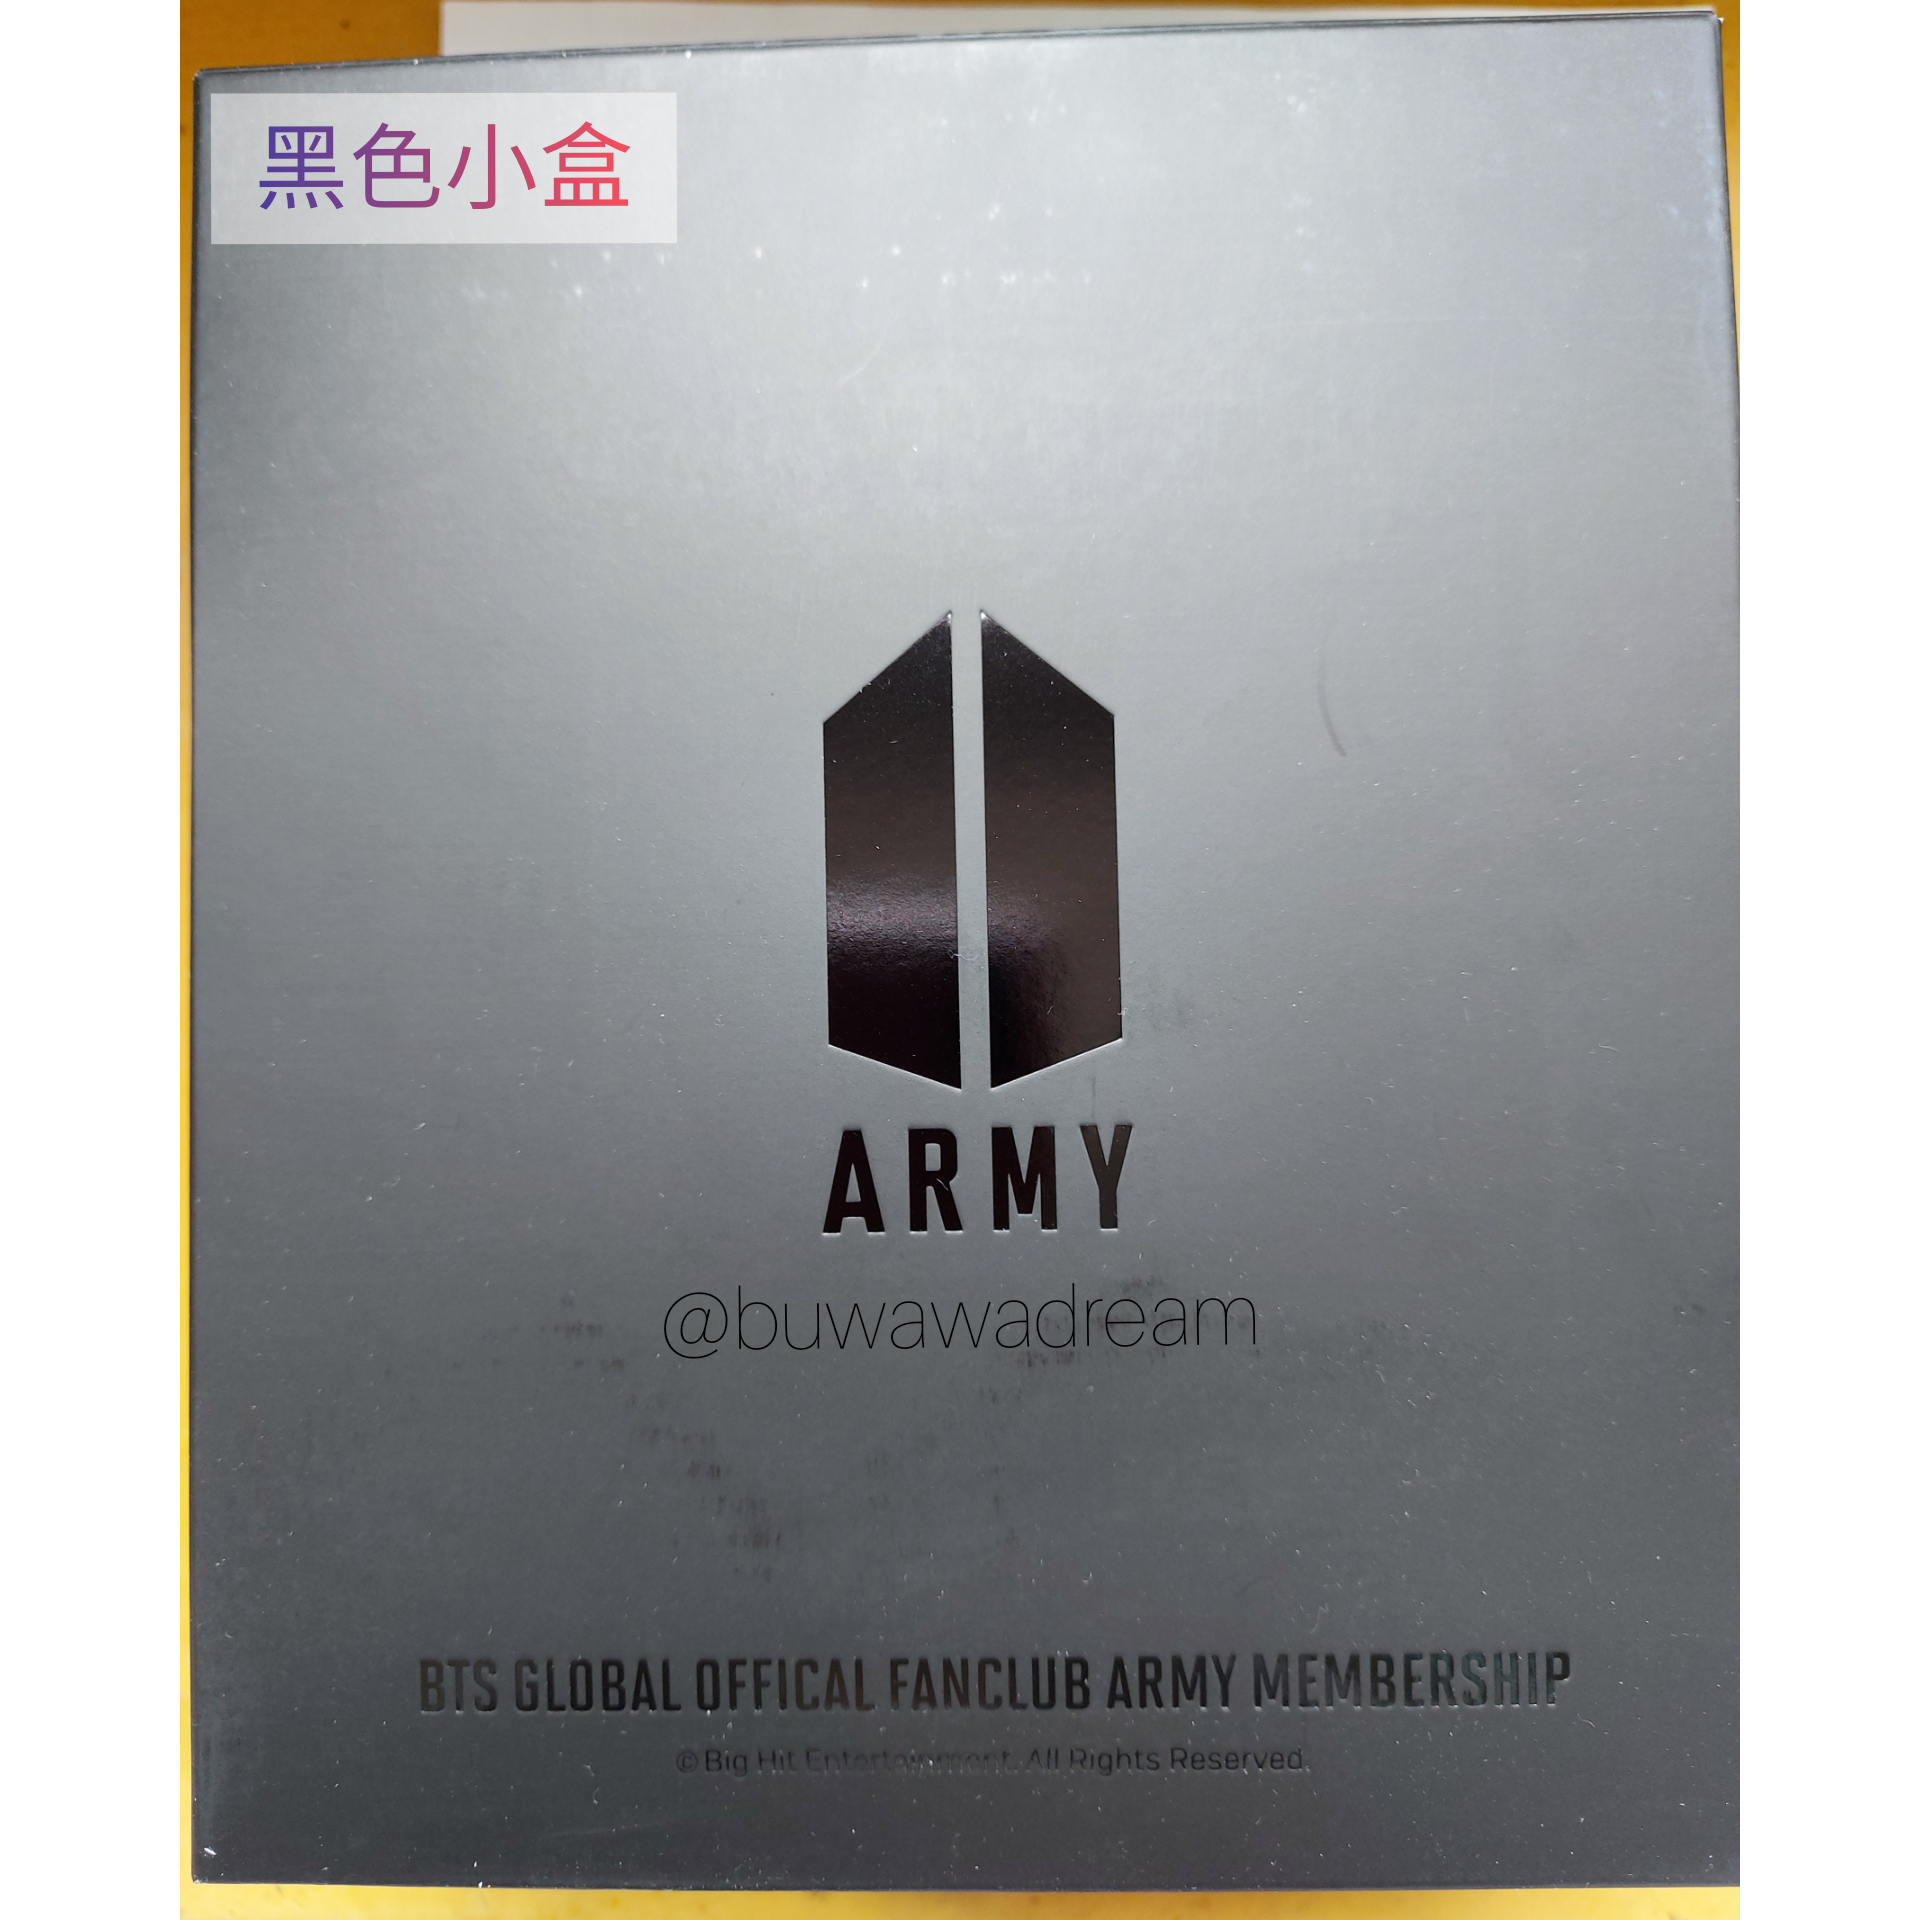 BTS 7th Global Official Fanclub Army Membership Kit 防彈官方7期